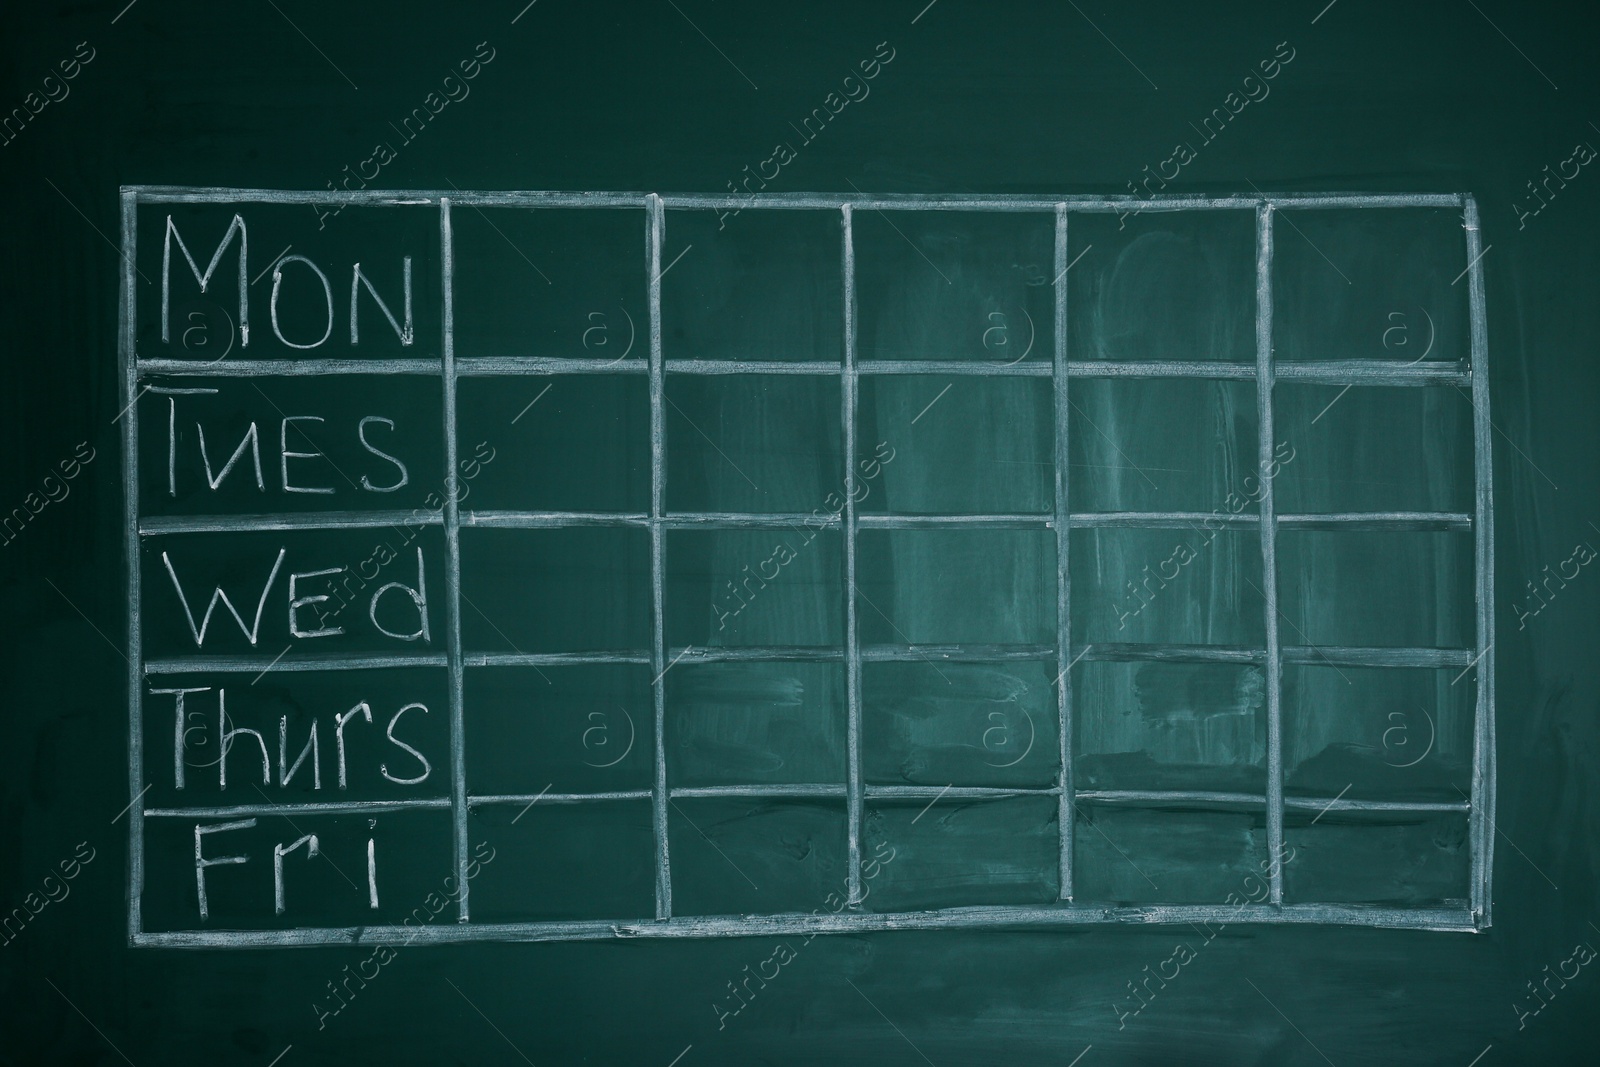 Photo of Weekly school timetable drawn on green chalkboard